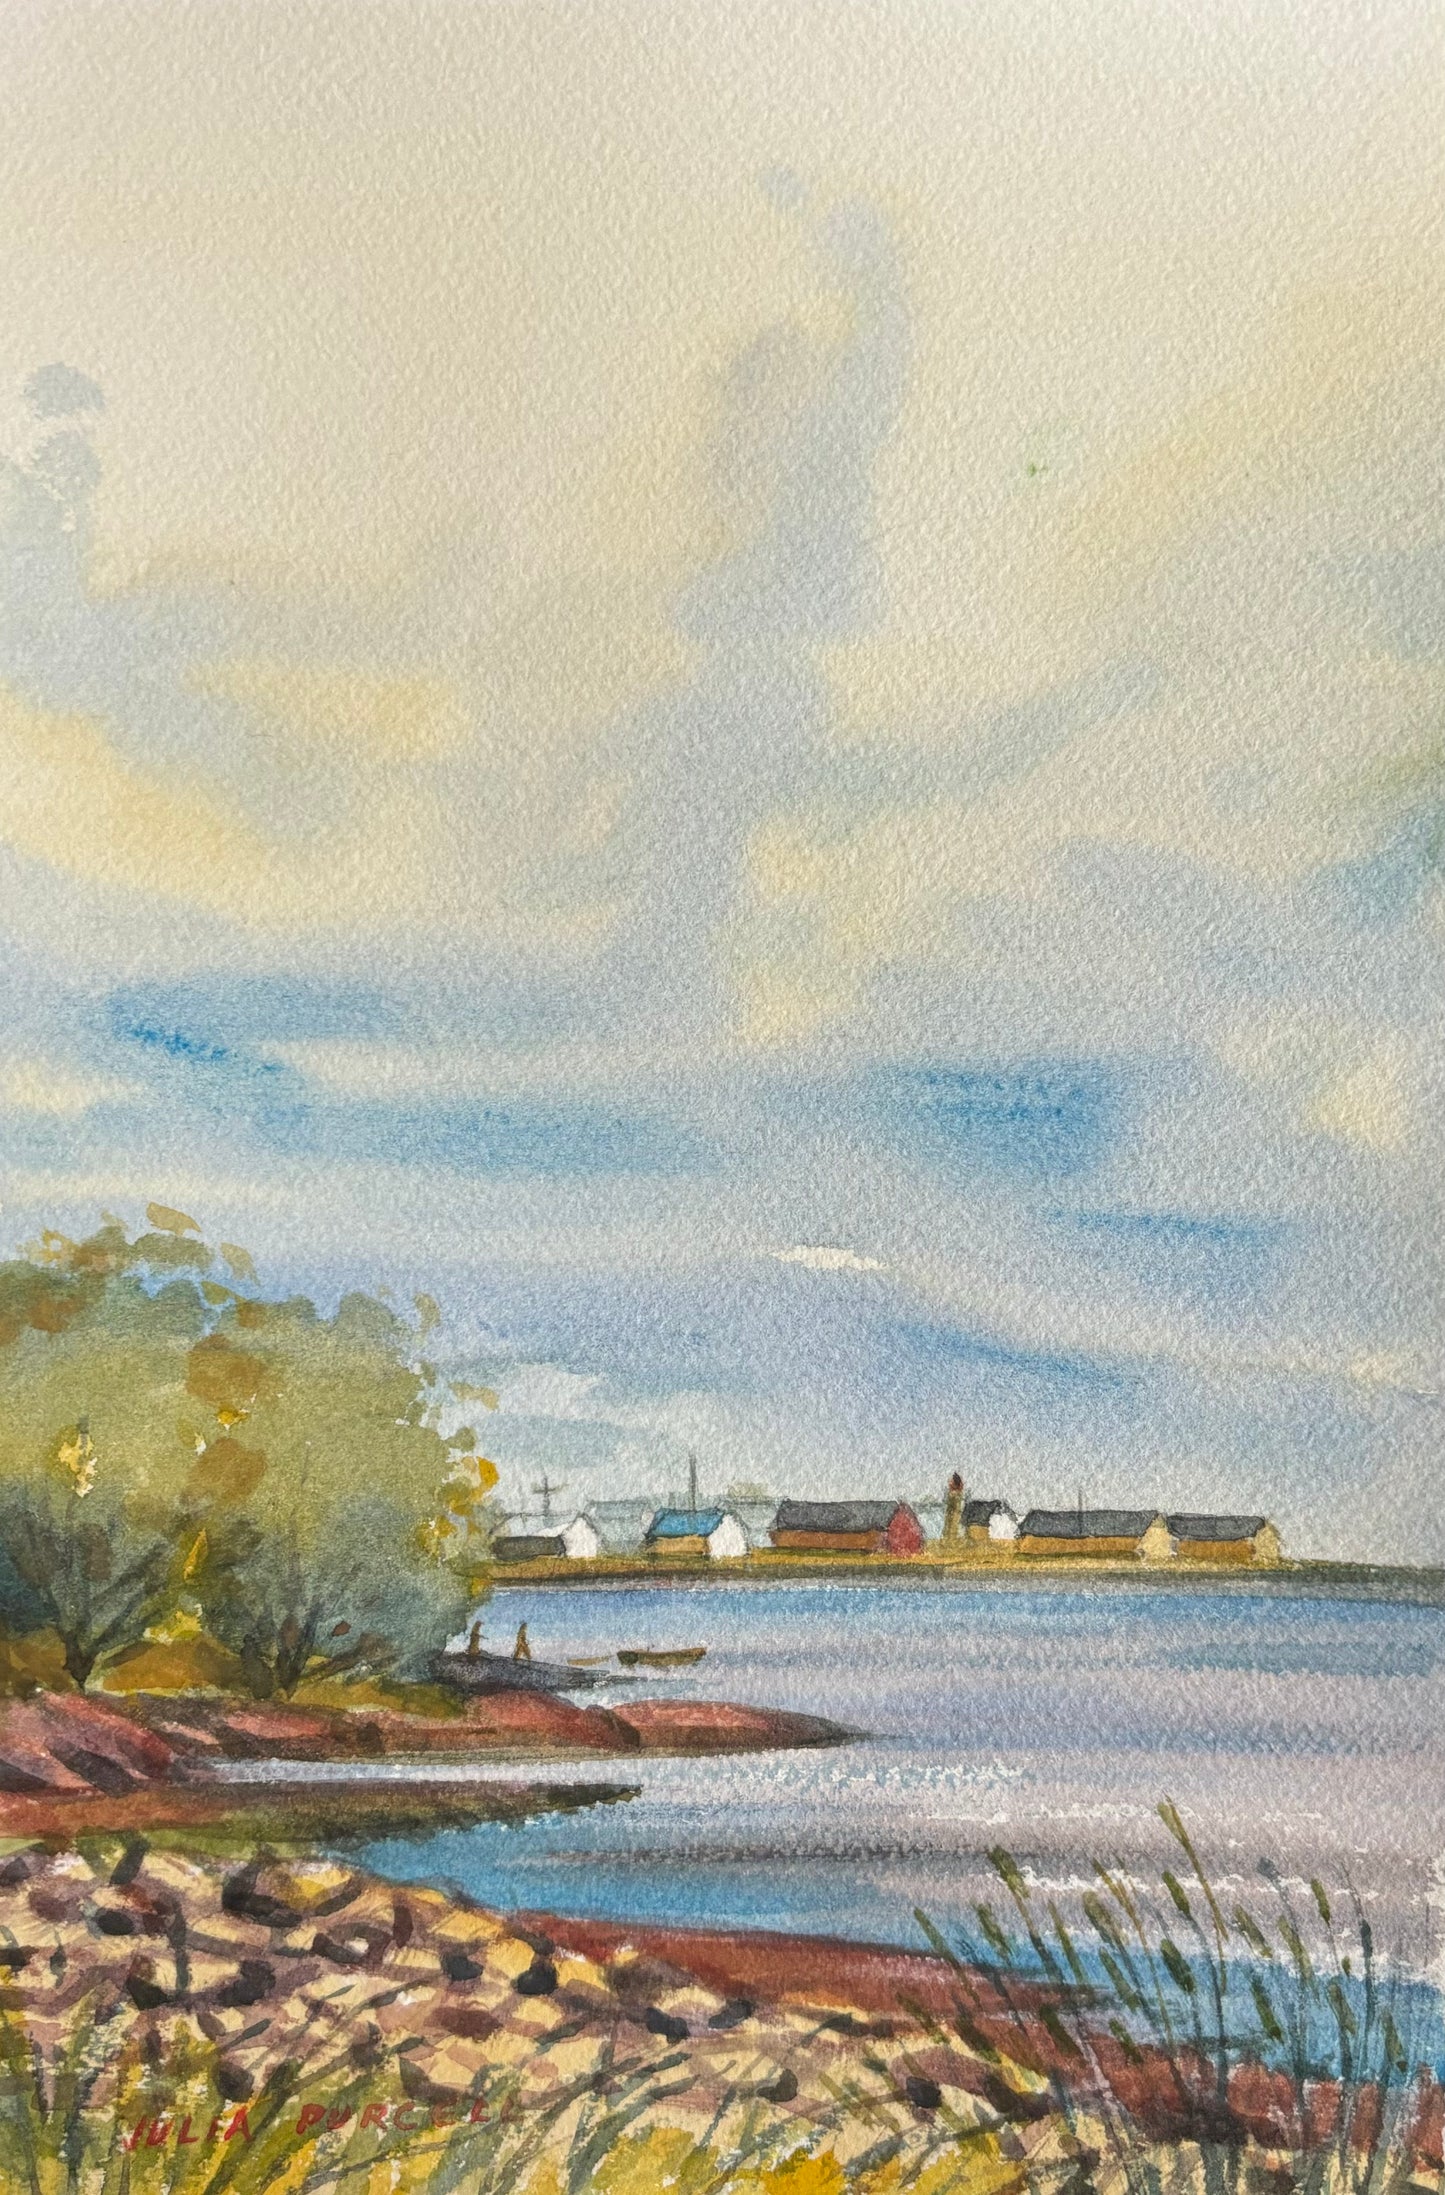 At the Cove, an Original Watercolour by Julia